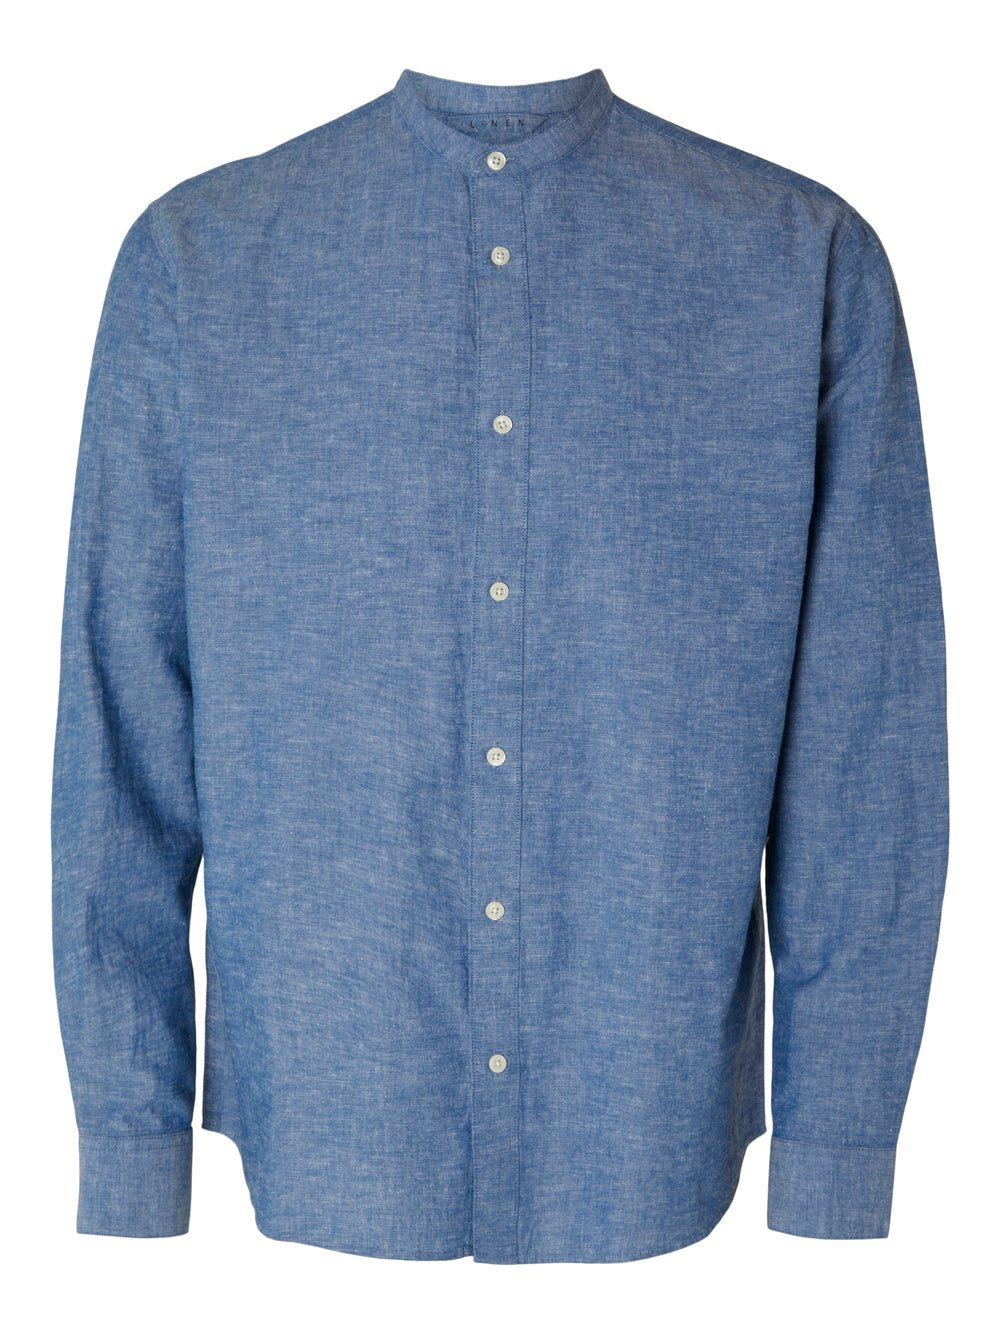 SLHREGNEW Medium Blue Denim Linen Shirt